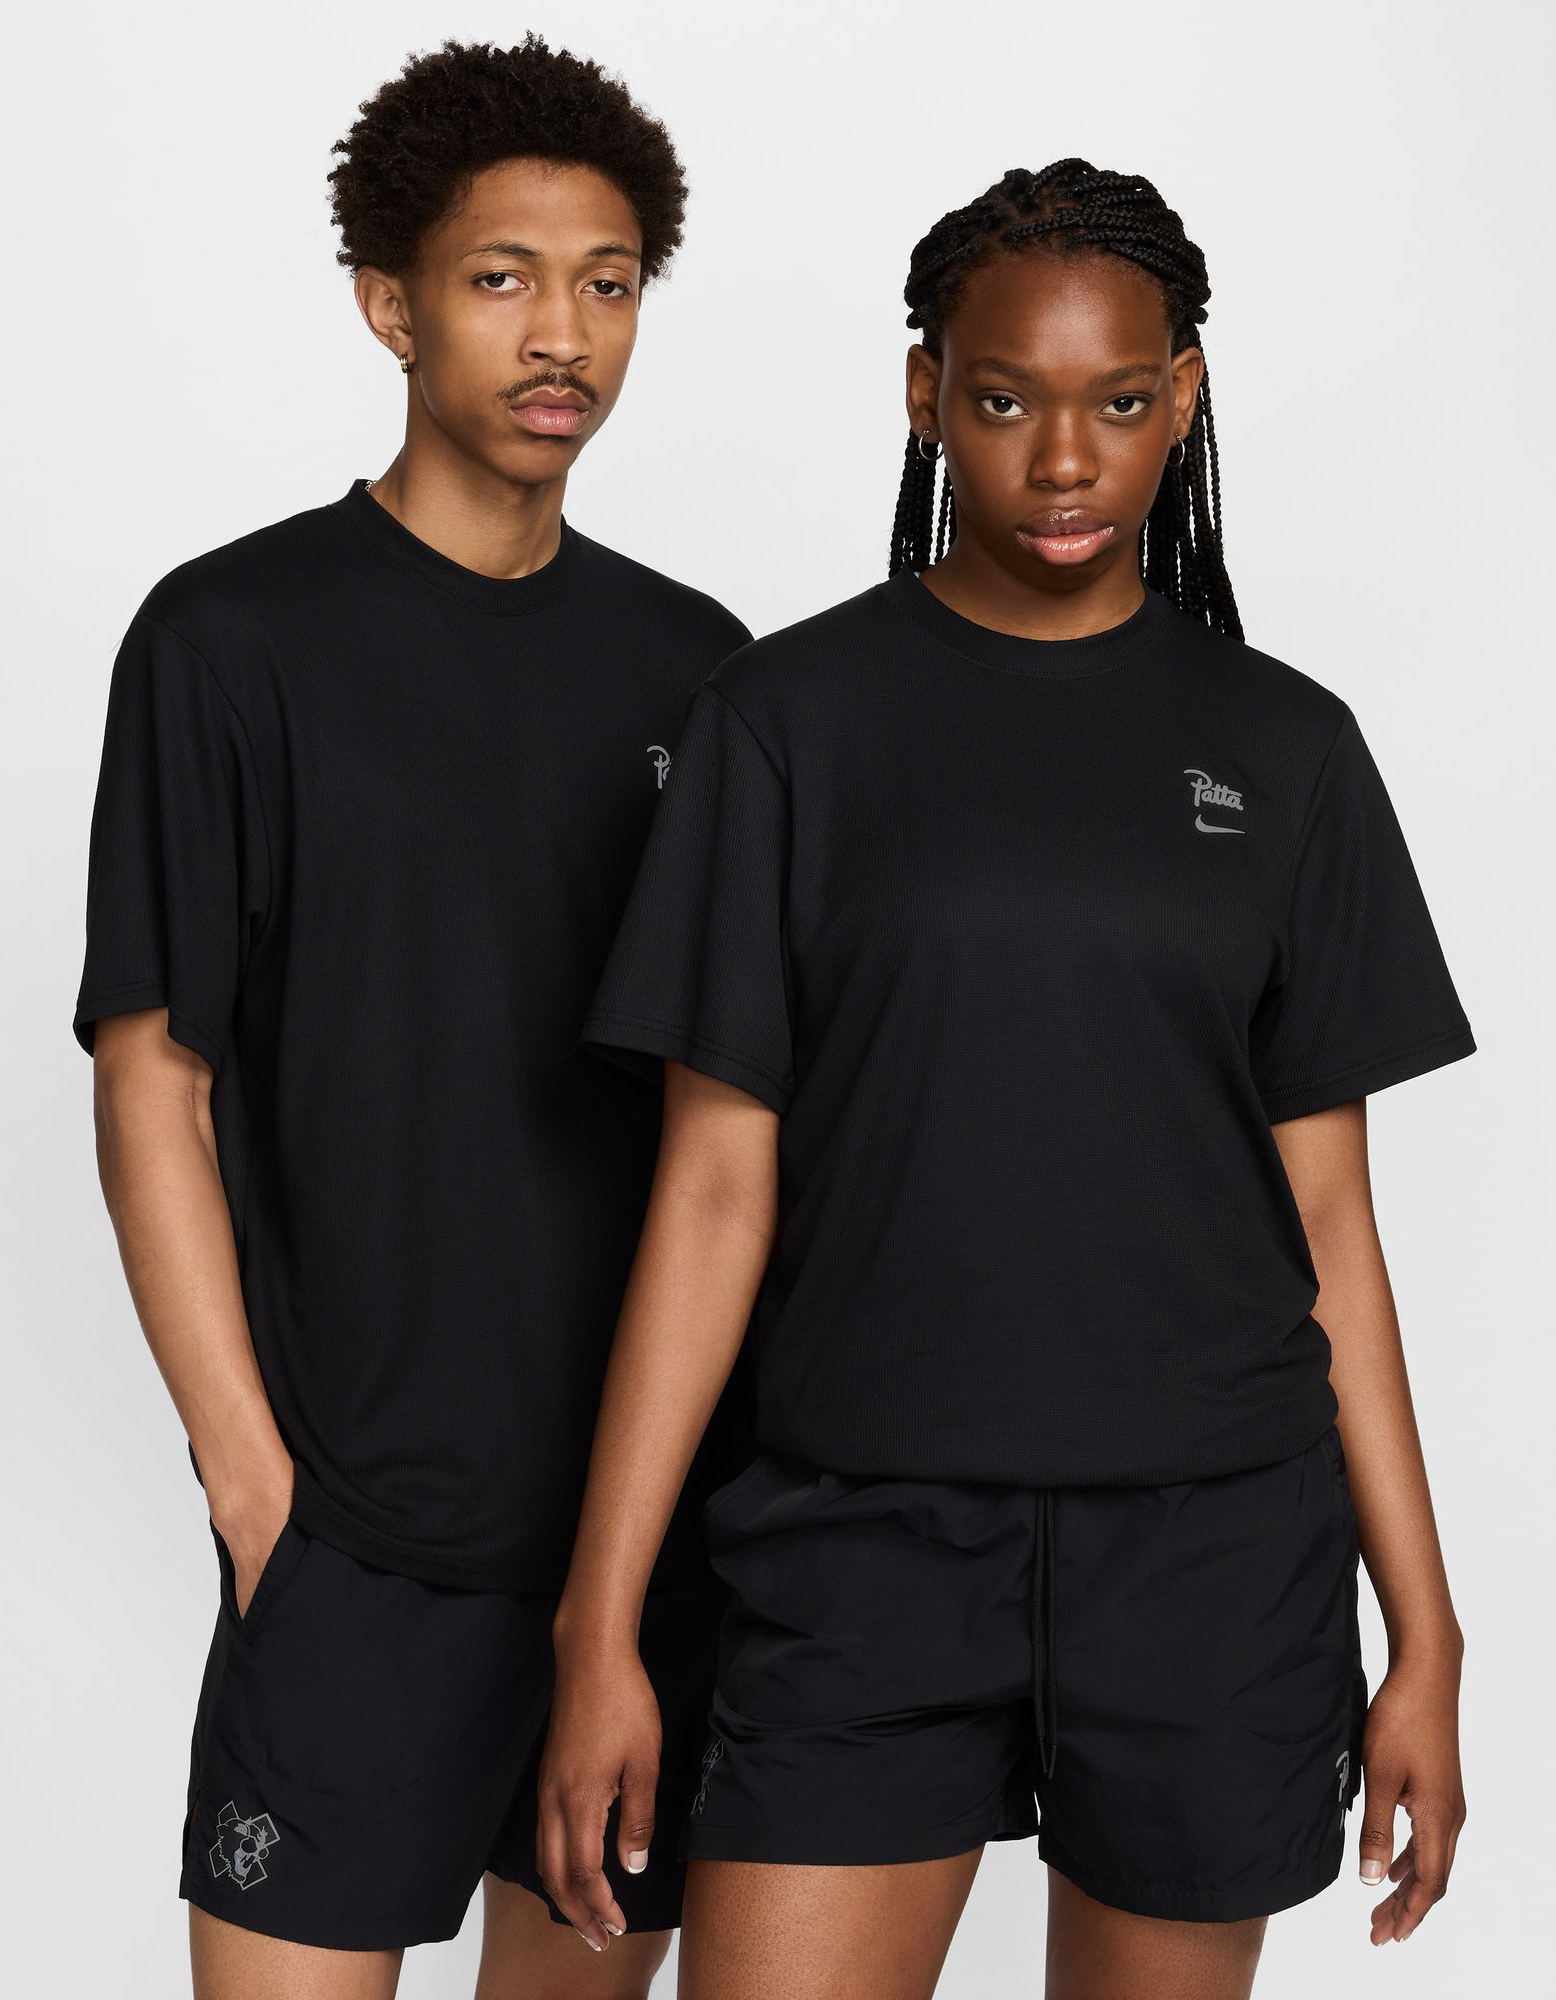 Nike x Patta T-Shirt - Men's